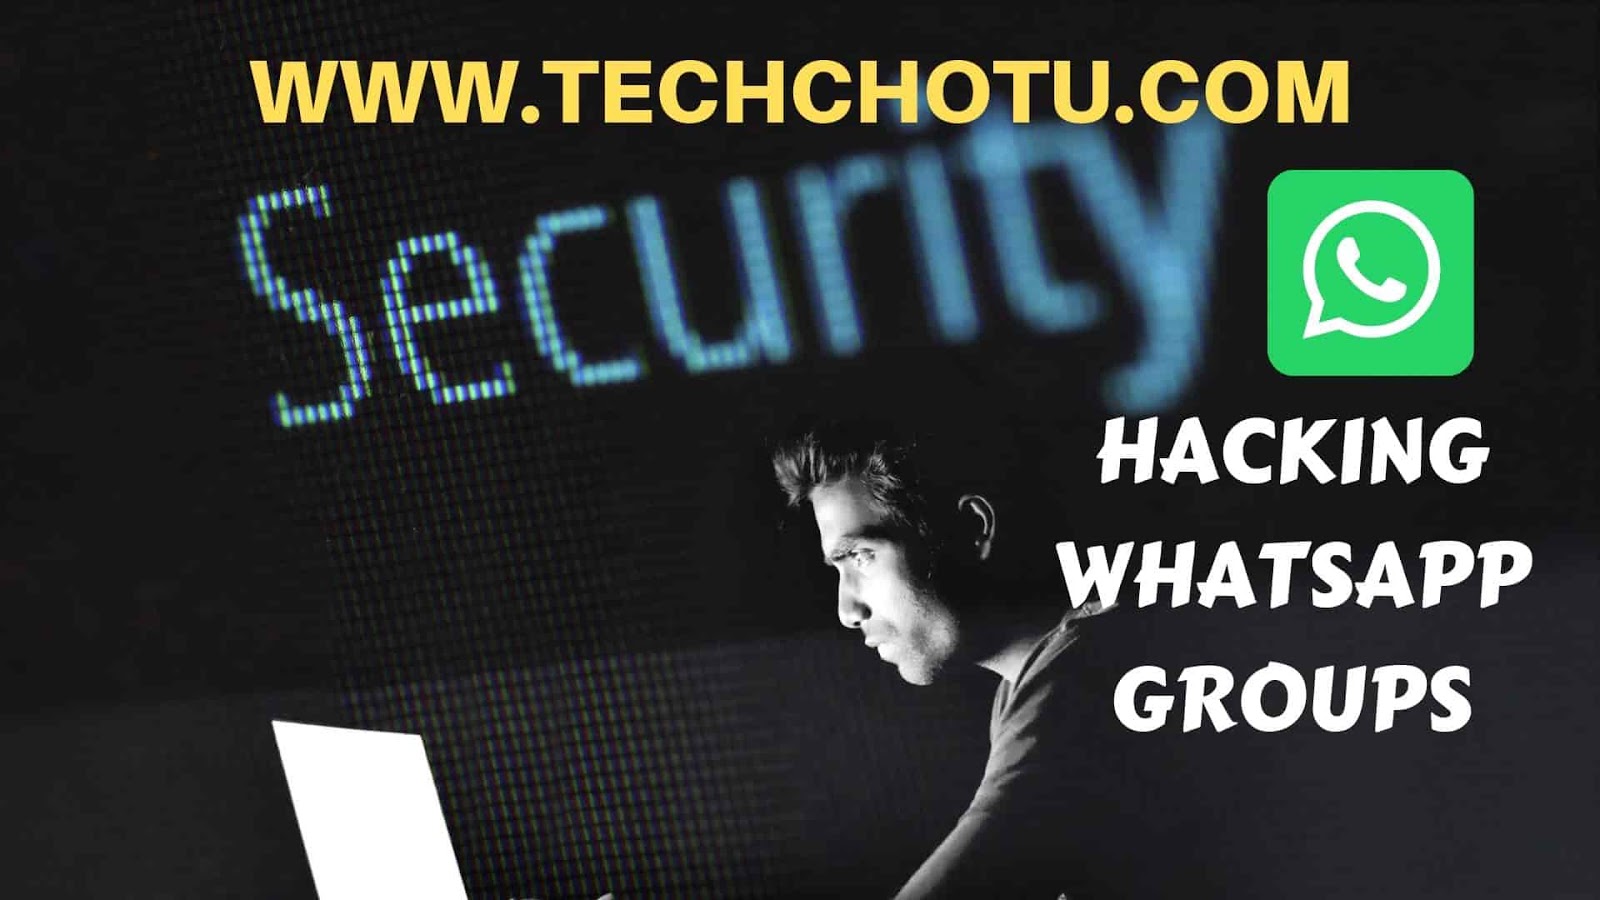 Hackin - HACKING WHATSAPP GROUP LINKS - TECHCHOTU-WhatsApp Group Link ...